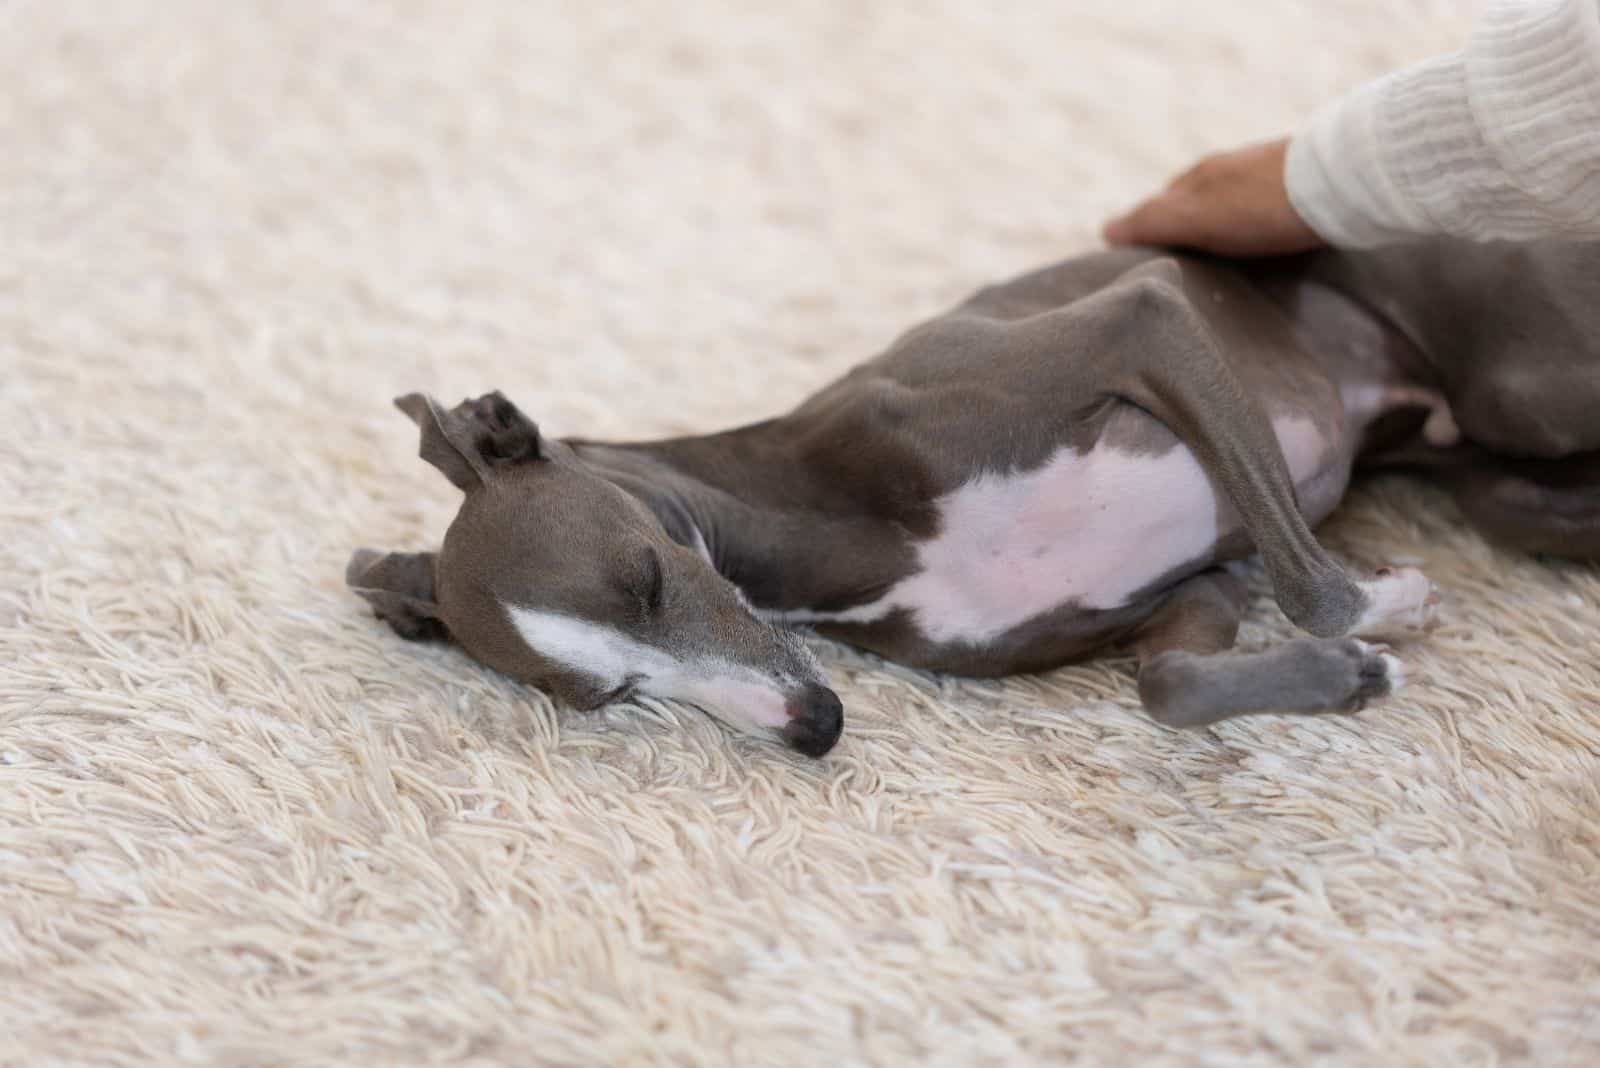 man petting on dog of greyhound breed sleeping on a fur carpet